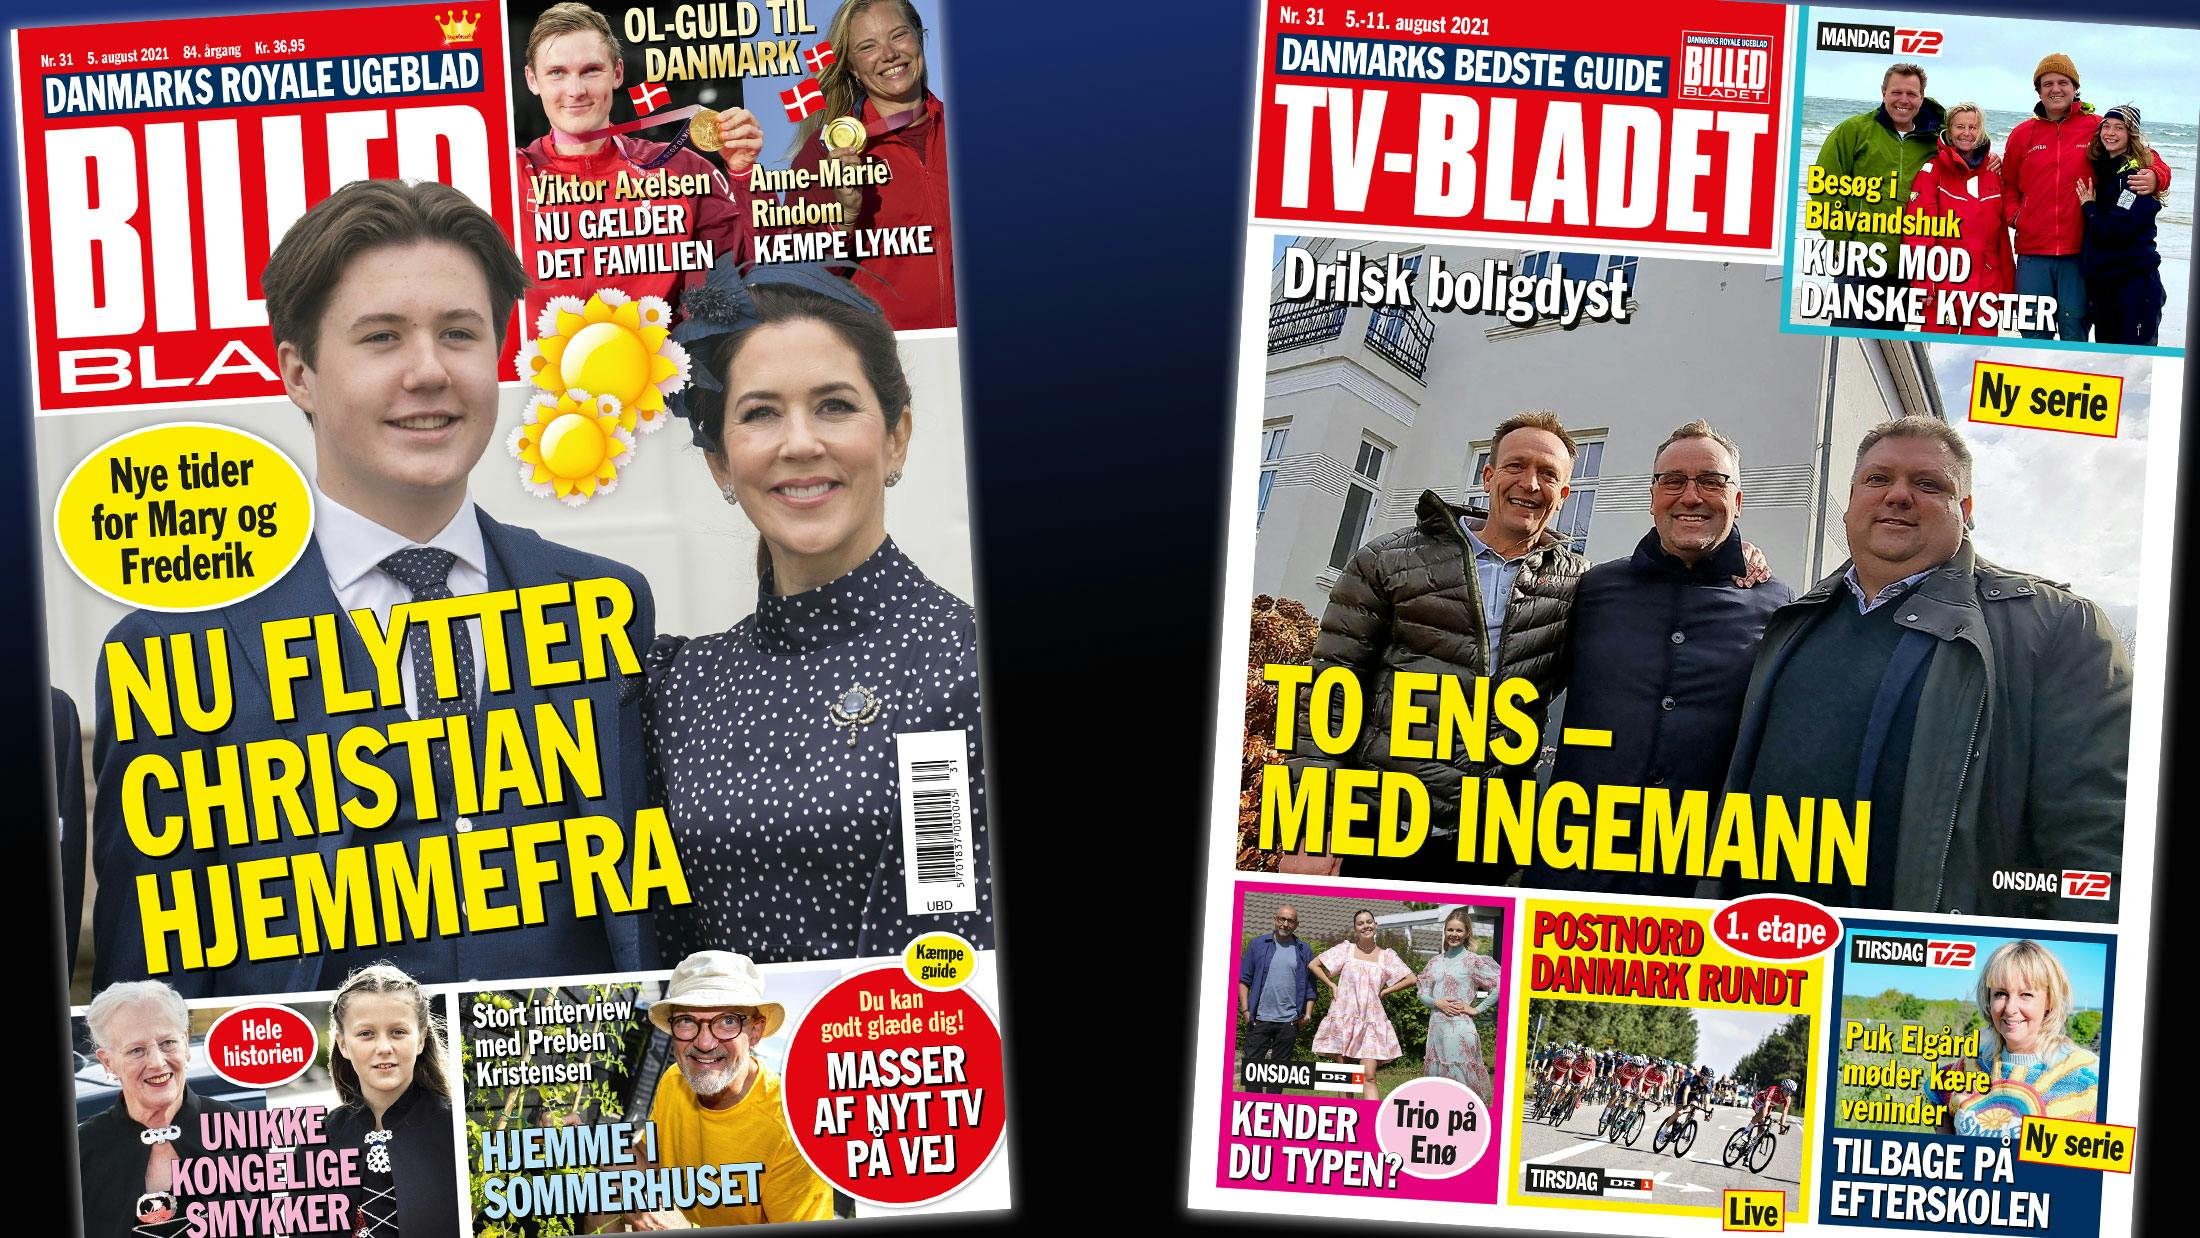 https://imgix.billedbladet.dk/media/article/webgrafik_bb31-forsider.jpg